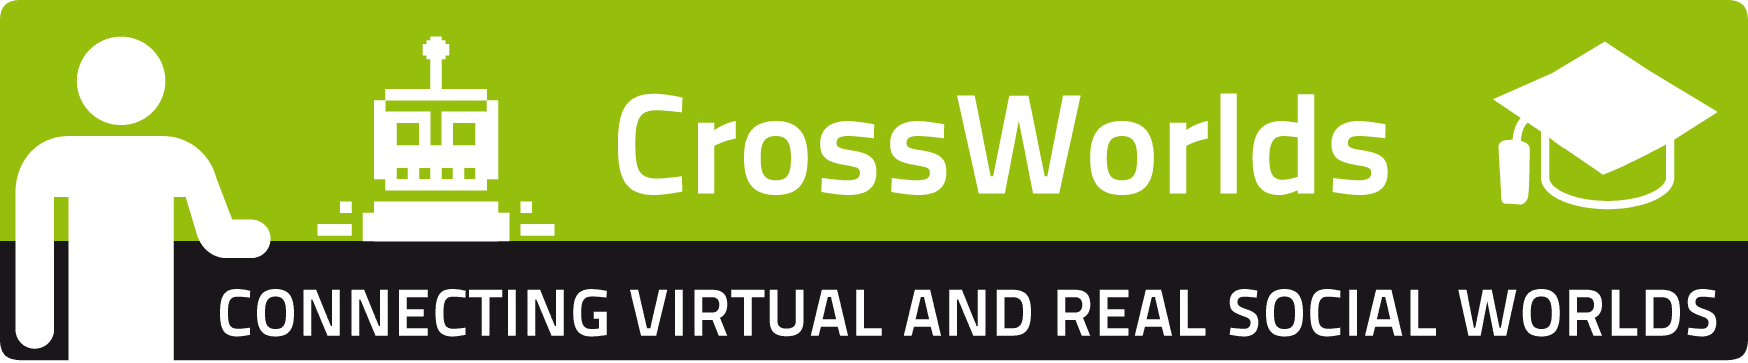 crossworlds.info/